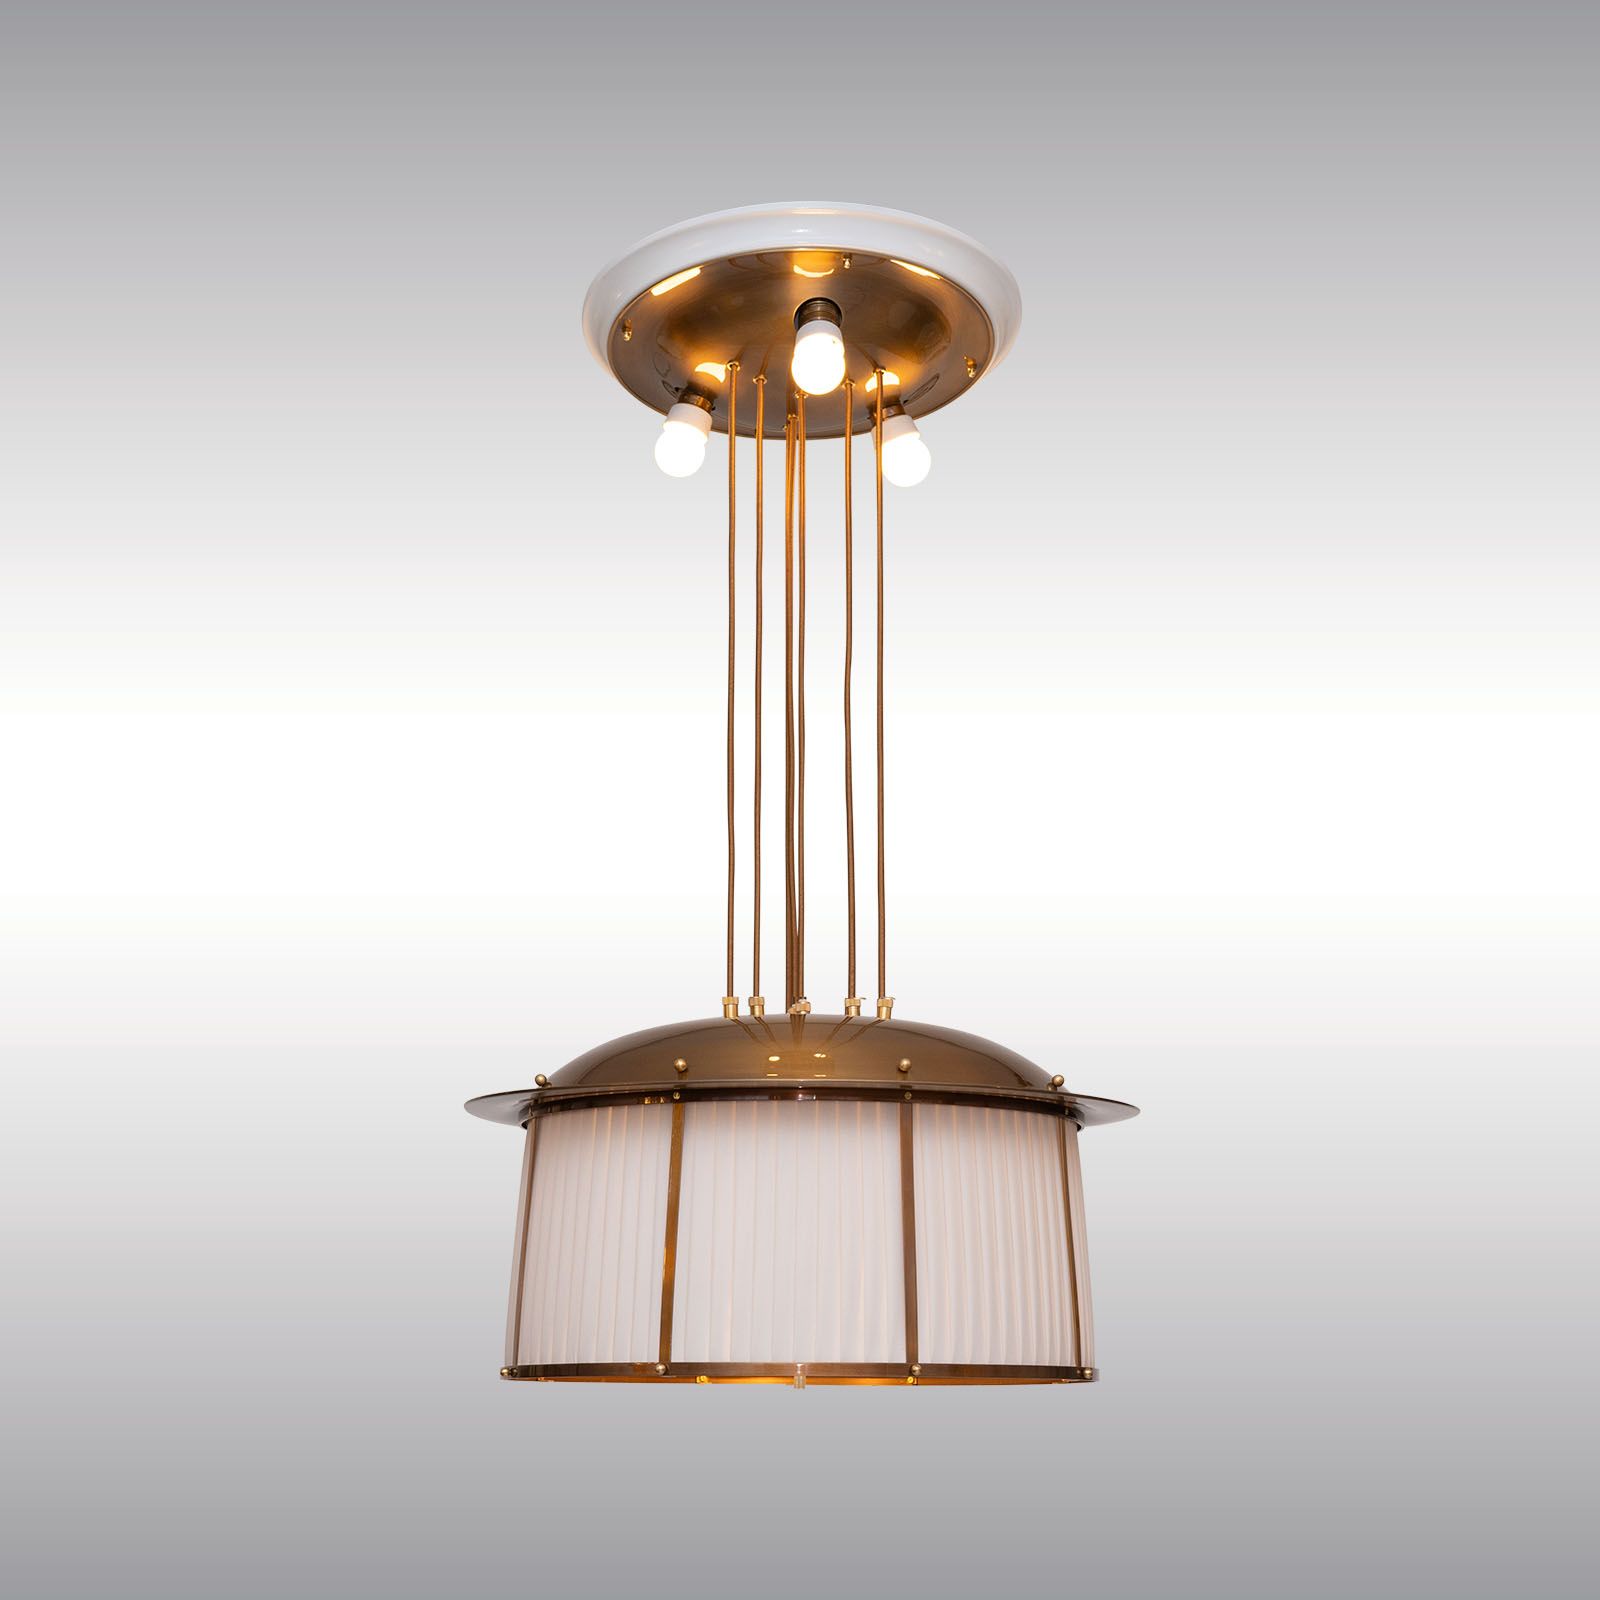 WOKA LAMPS VIENNA - OrderNr.: 20907|Pollak - Design: Josef Hoffmann